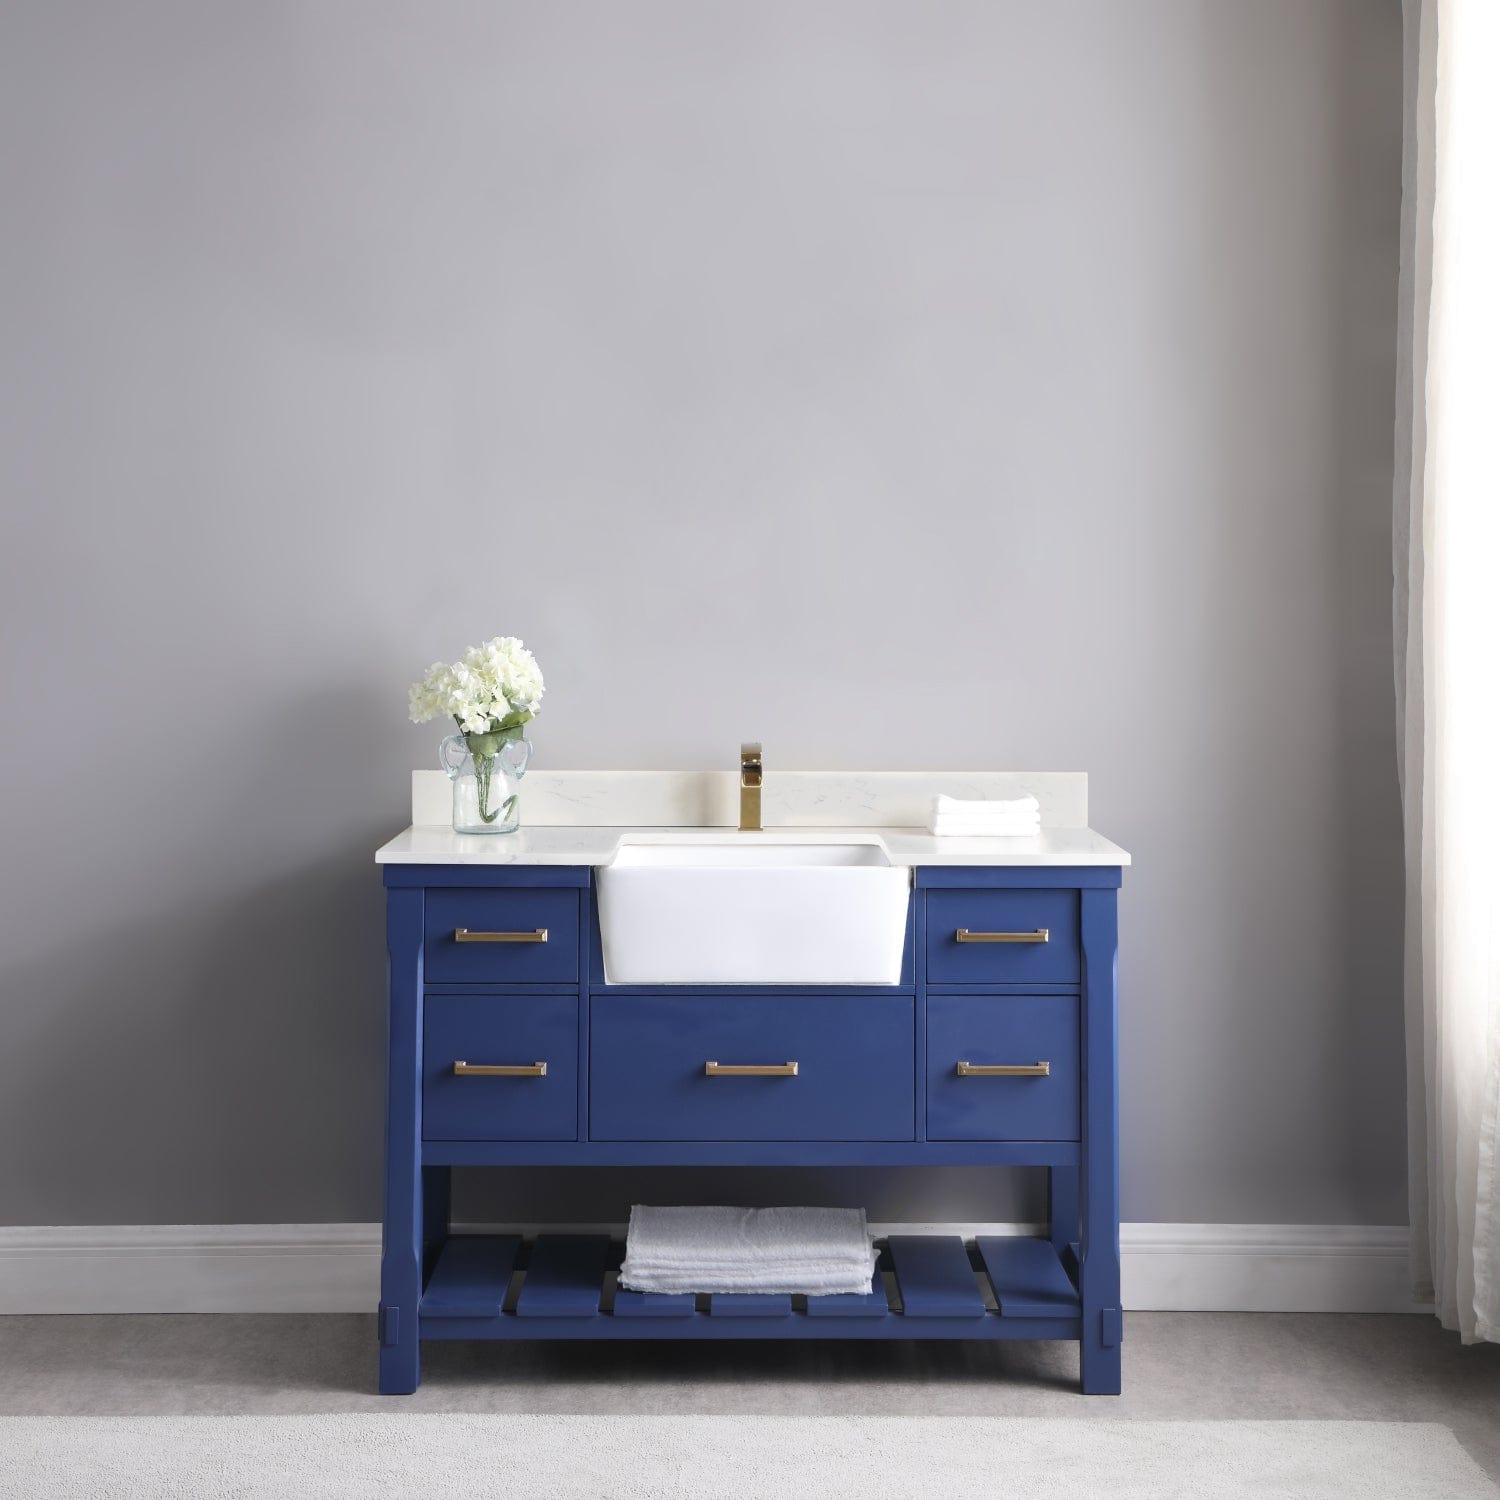 Altair Georgia 48" Single Bathroom Vanity Set in Jewelry Blue and Composite Carrara White Stone Top with White Farmhouse Basin with Mirror 537048-JB-AW - Molaix631112970594Vanity537048-JB-AW